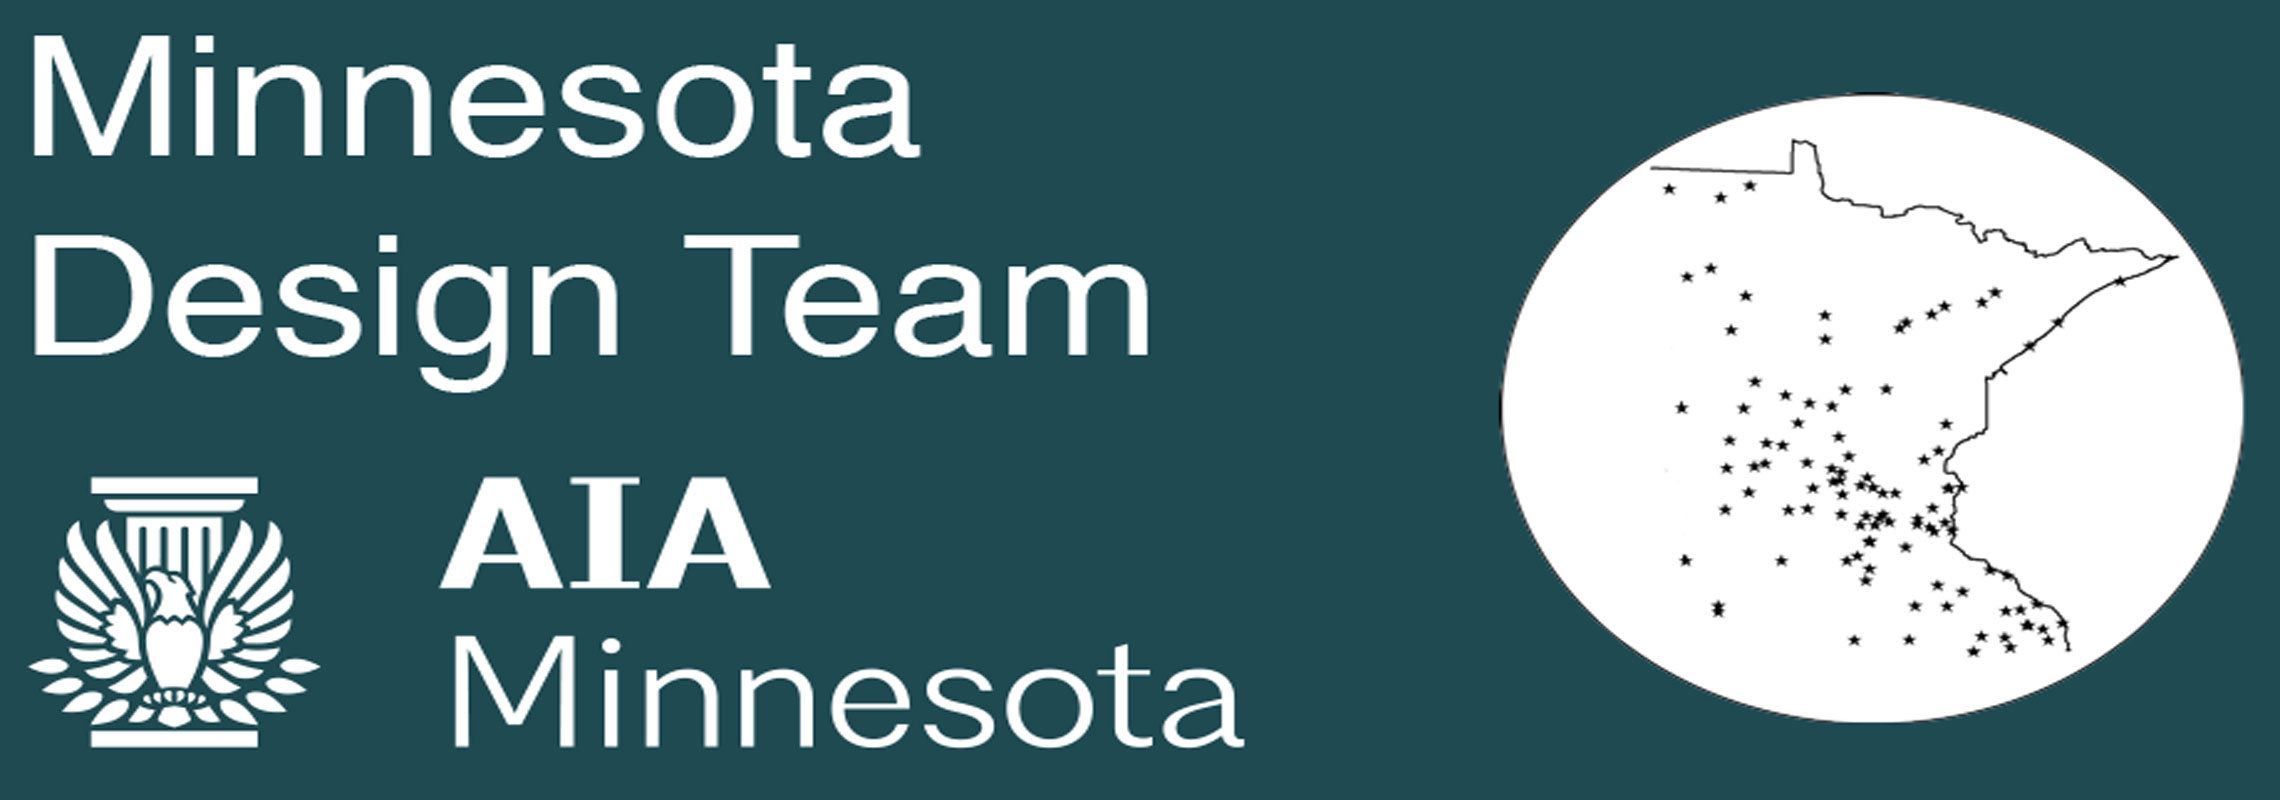 Minnesota Design Team